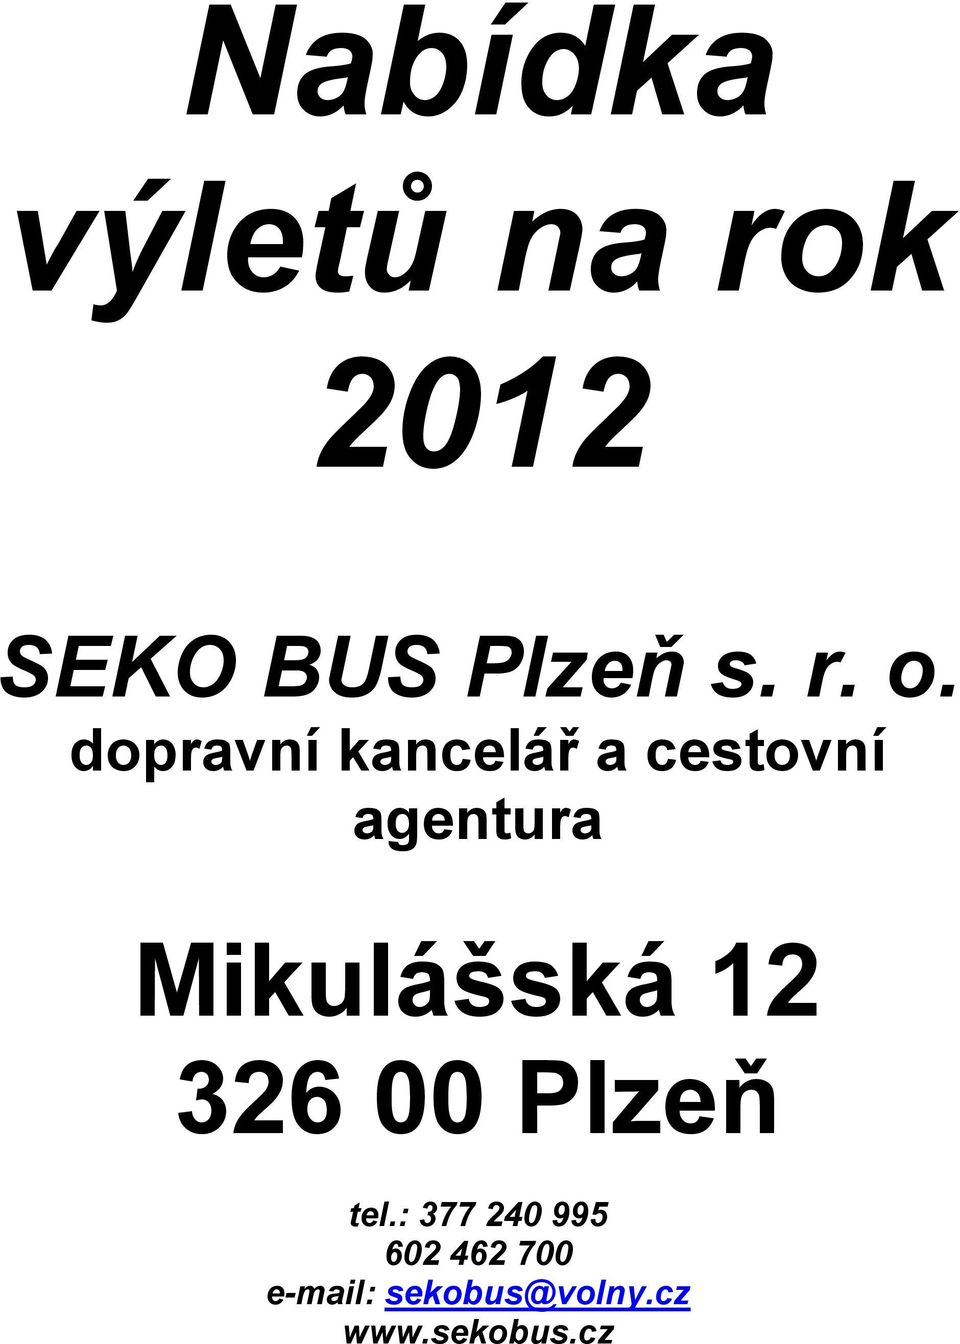 Mikulášská 12 326 00 Plzeň tel.